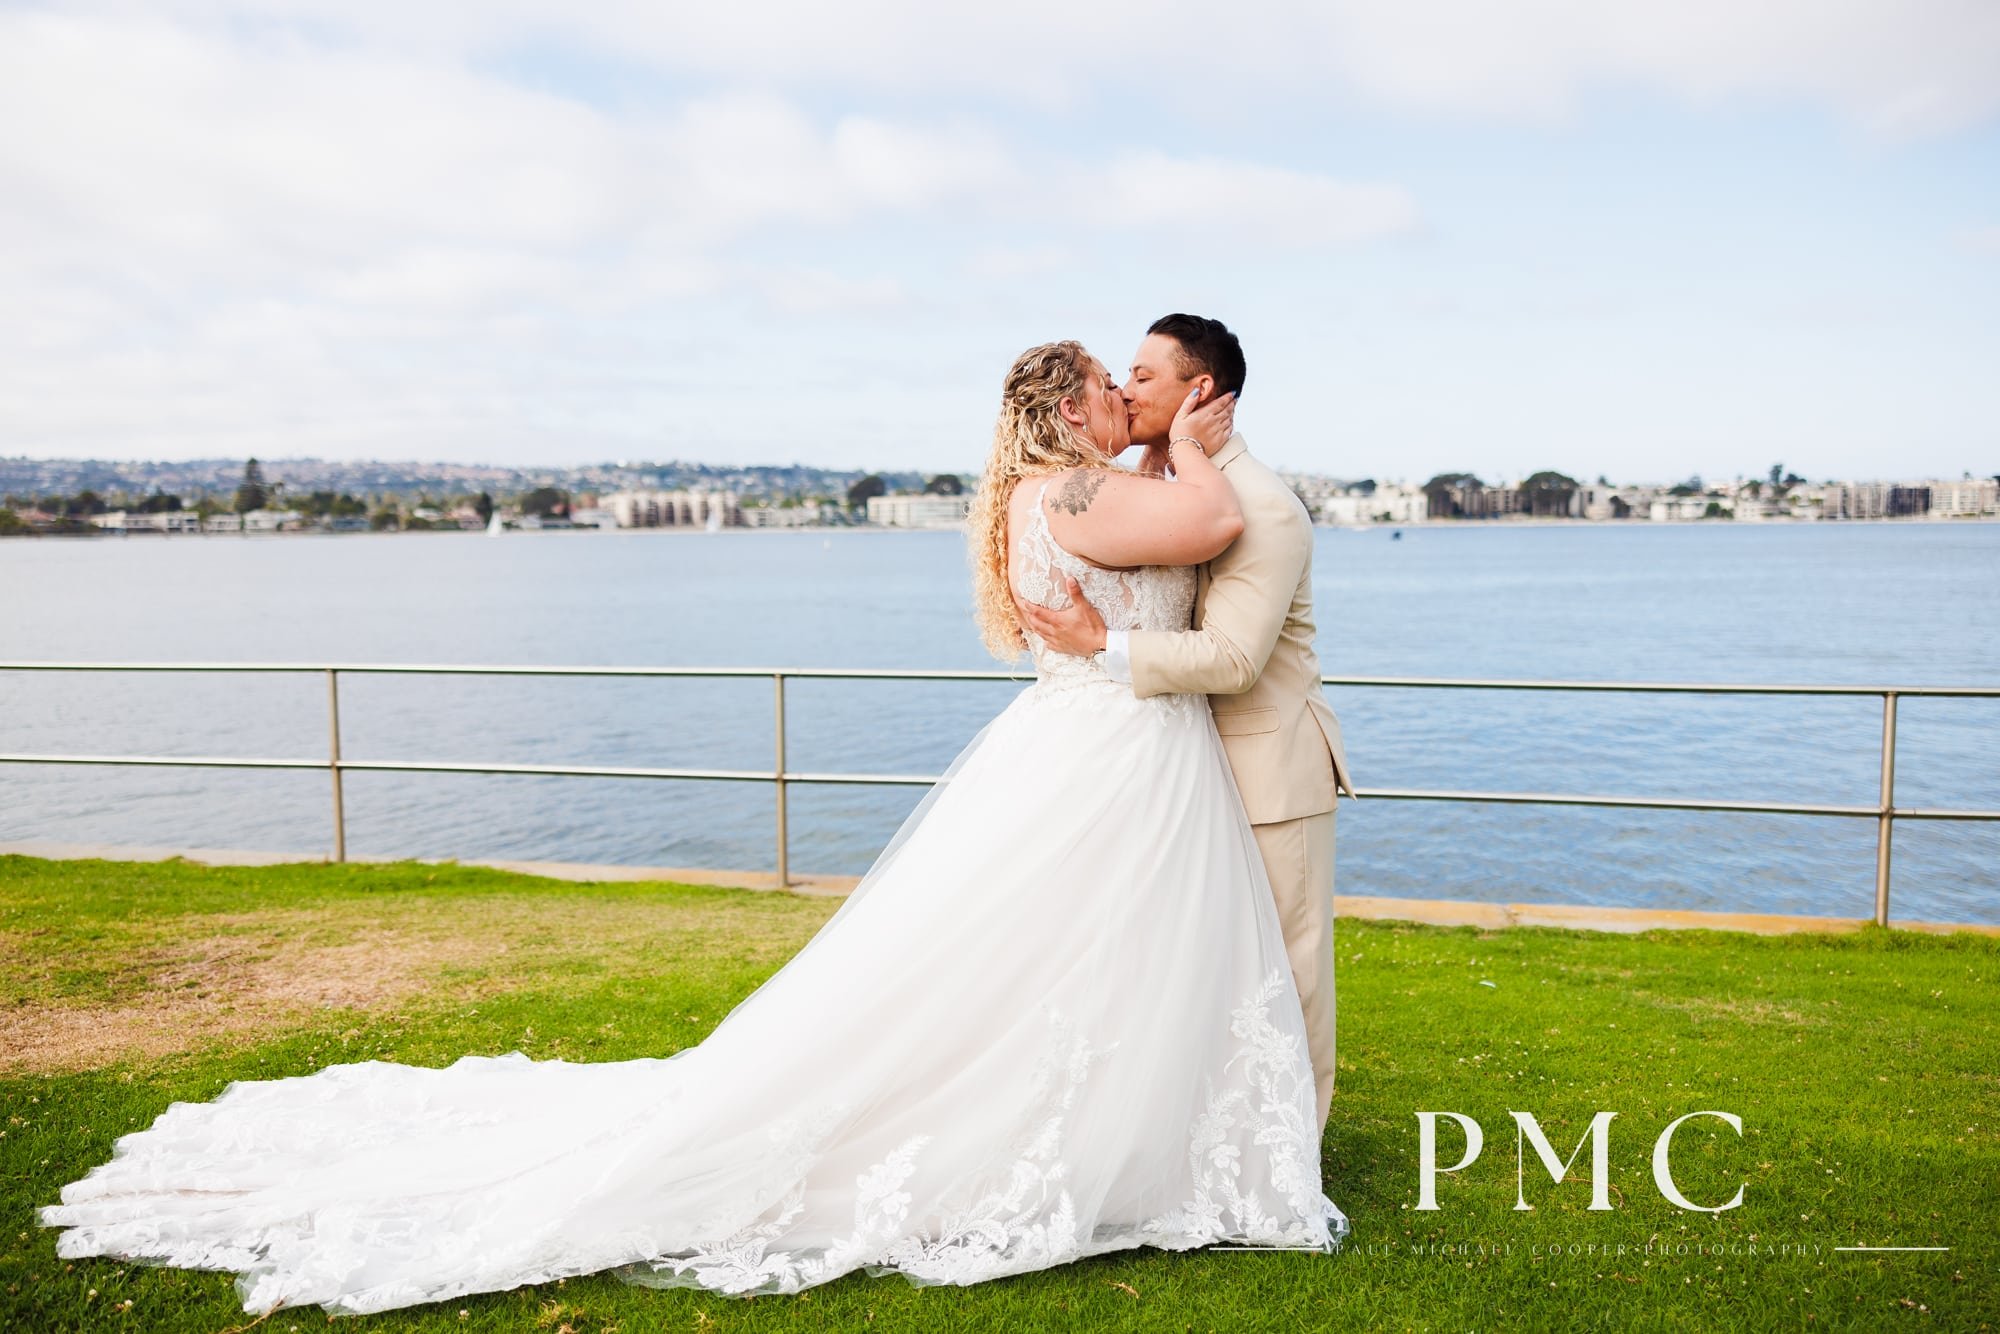 Tower Beach Club - Mission Bay - Best San Diego Wedding Photographer-6.jpg